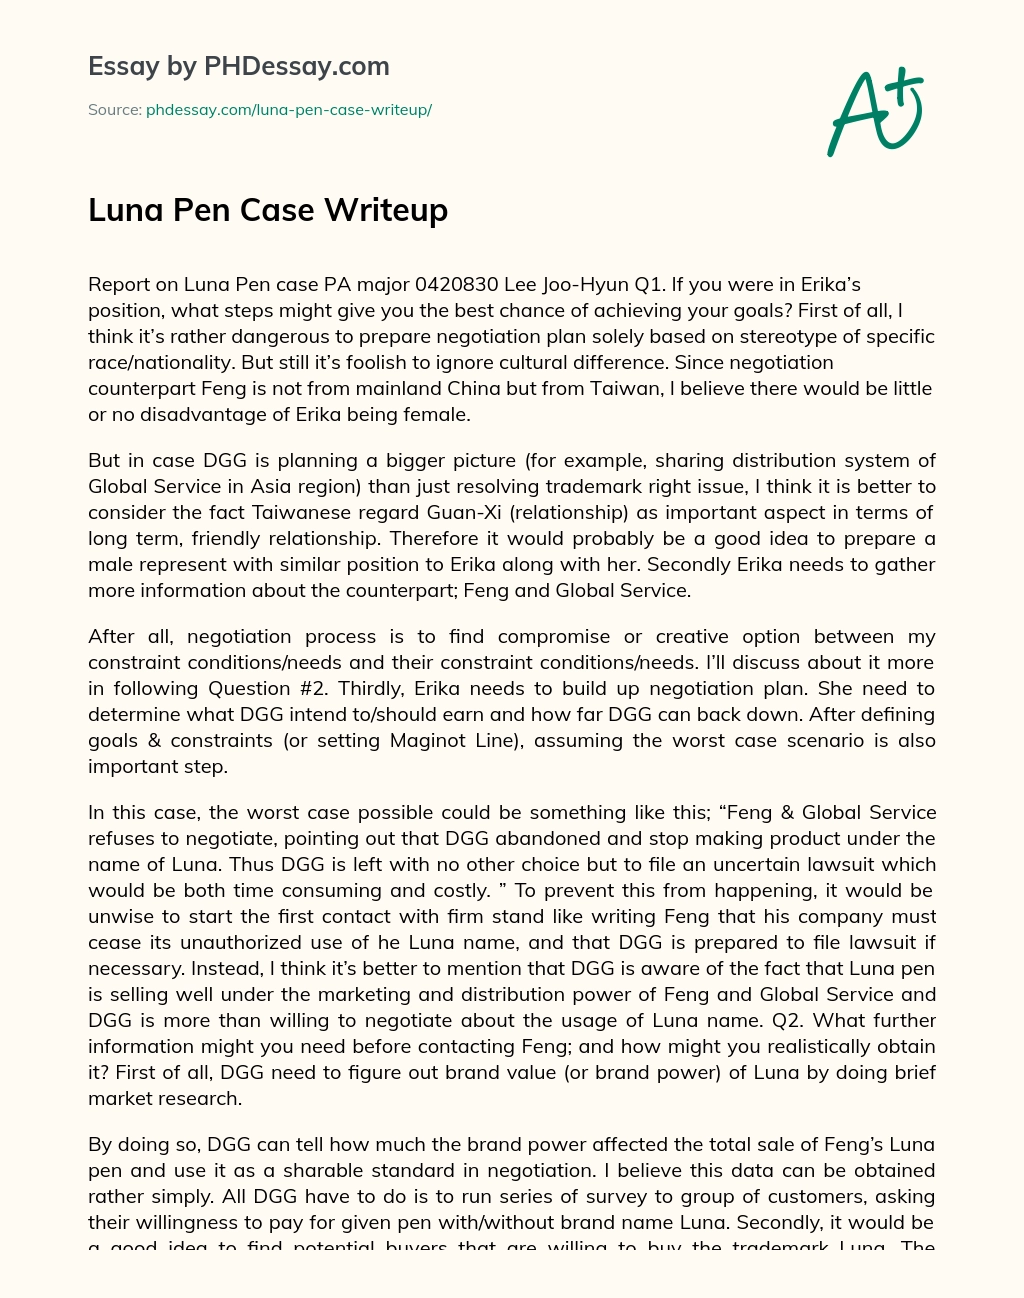 Luna Pen Case Writeup essay